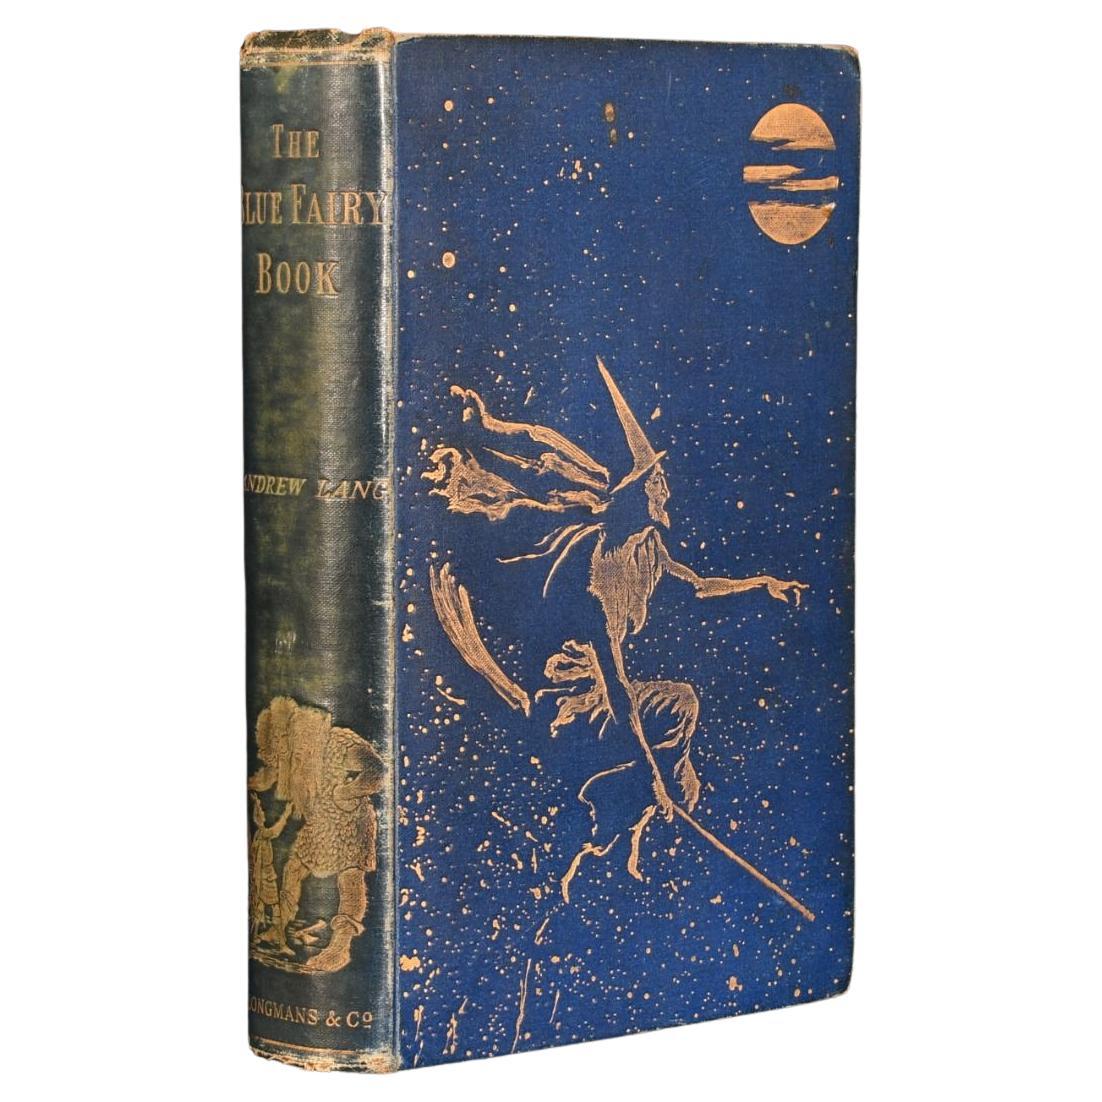 Livre The Blue Fairy de 1889